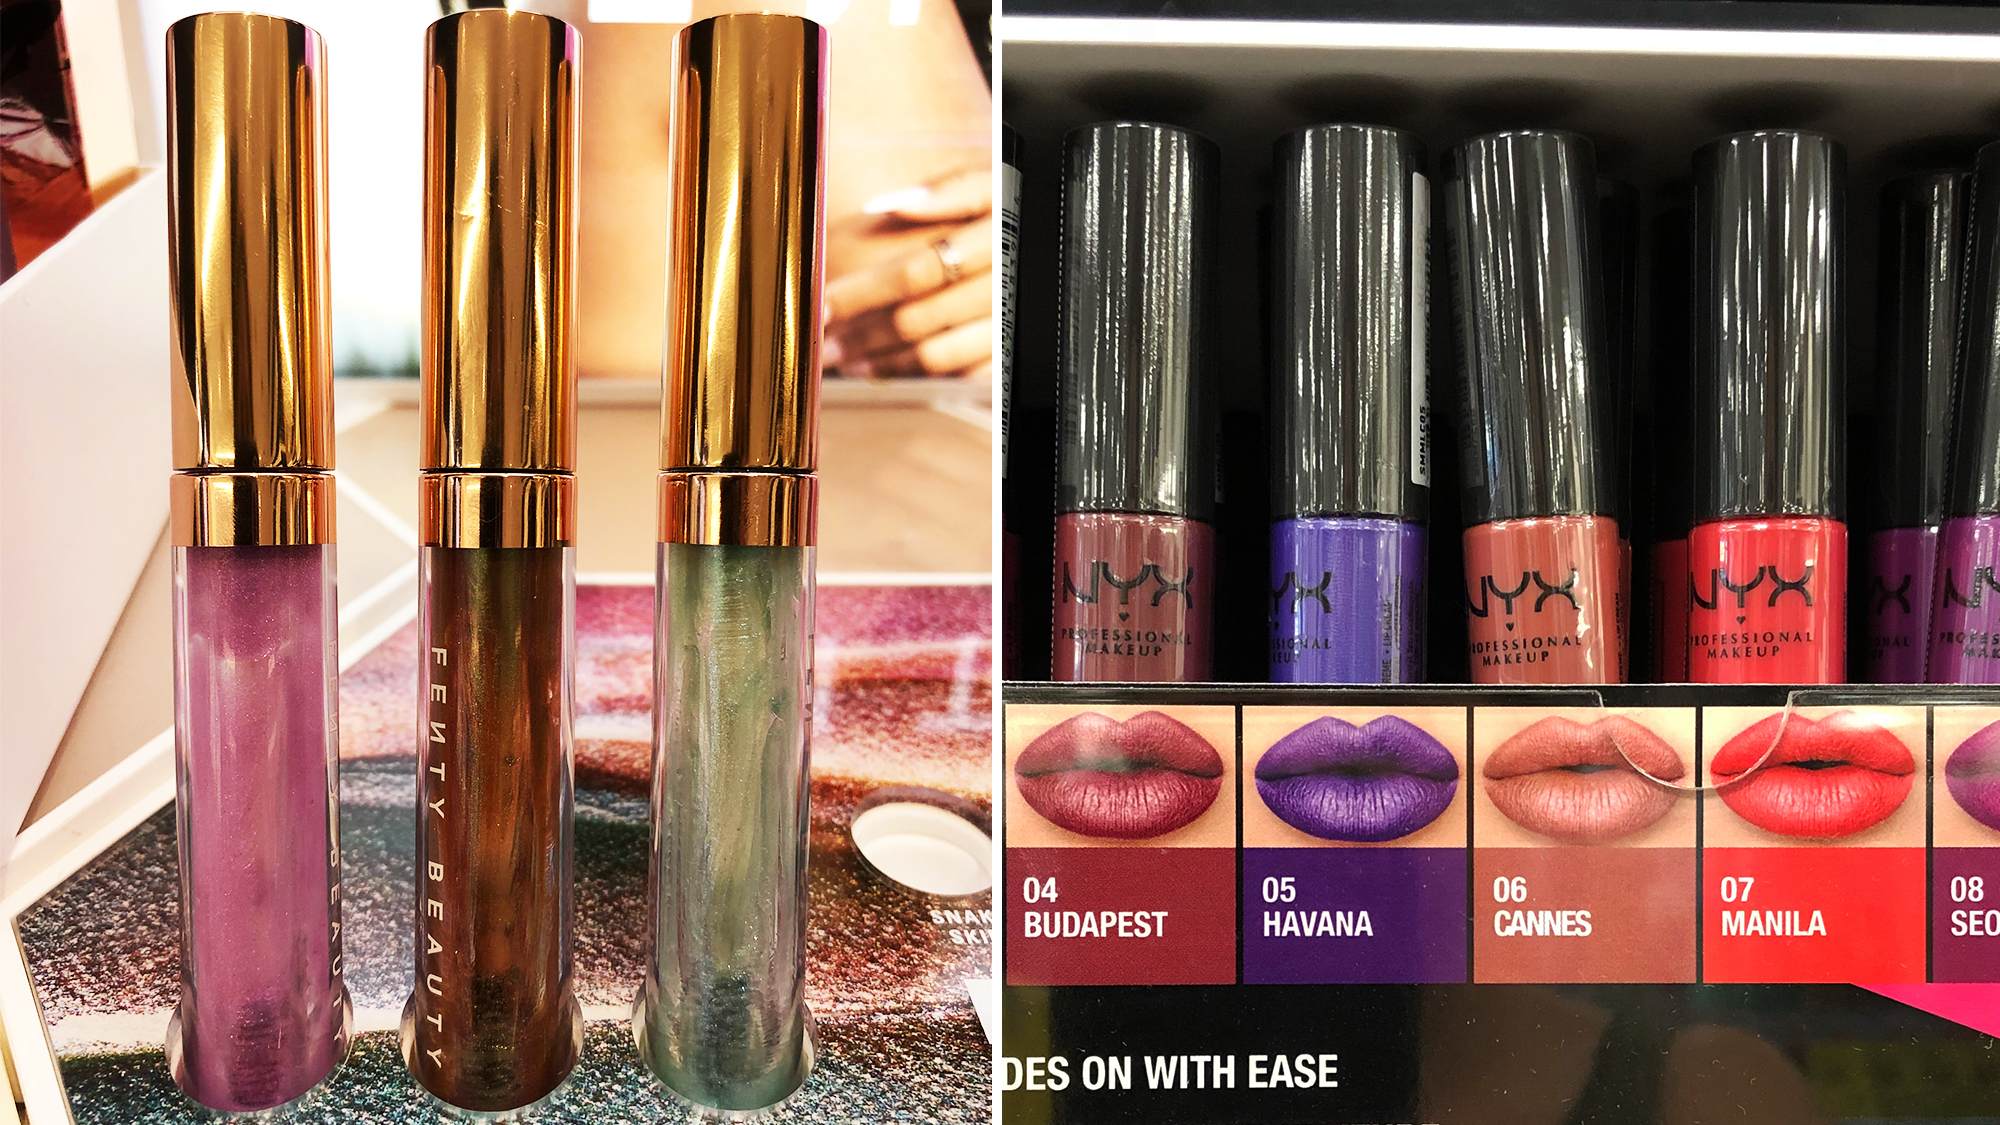 Revlon Super Lustrous Lip Gloss: A Fenty Beauty Gloss Bomb Alternative